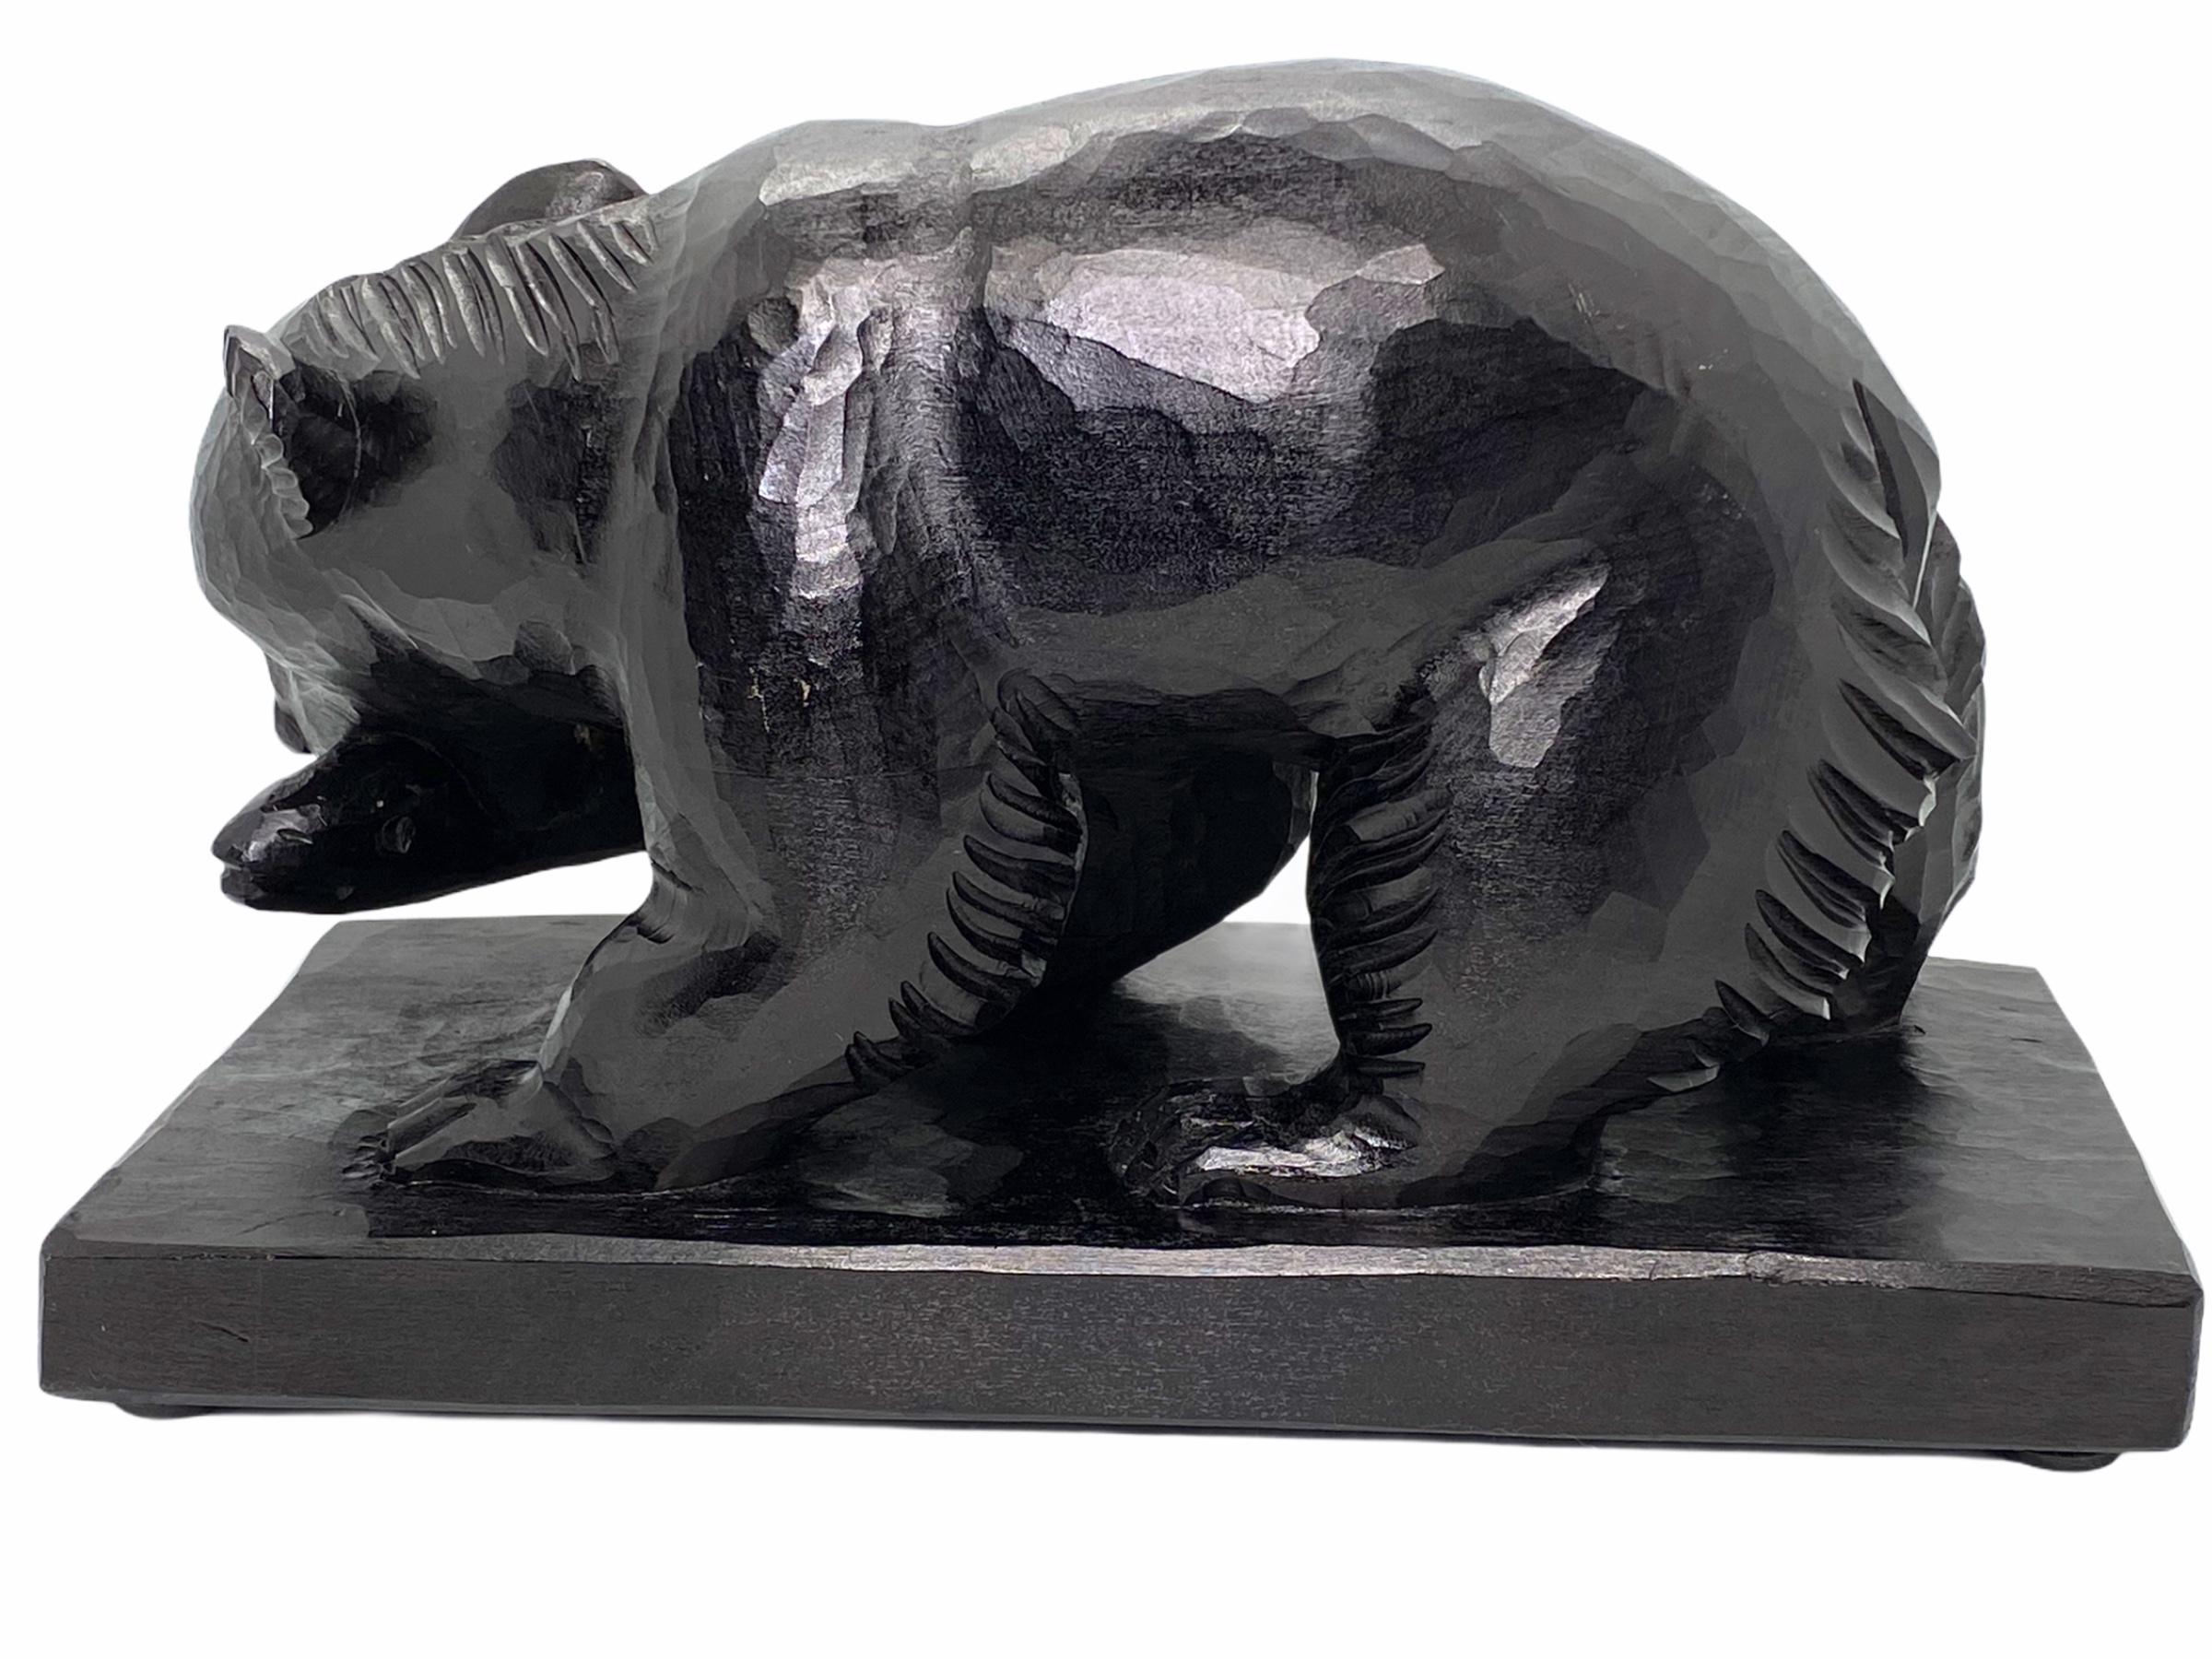 japanese bear statue